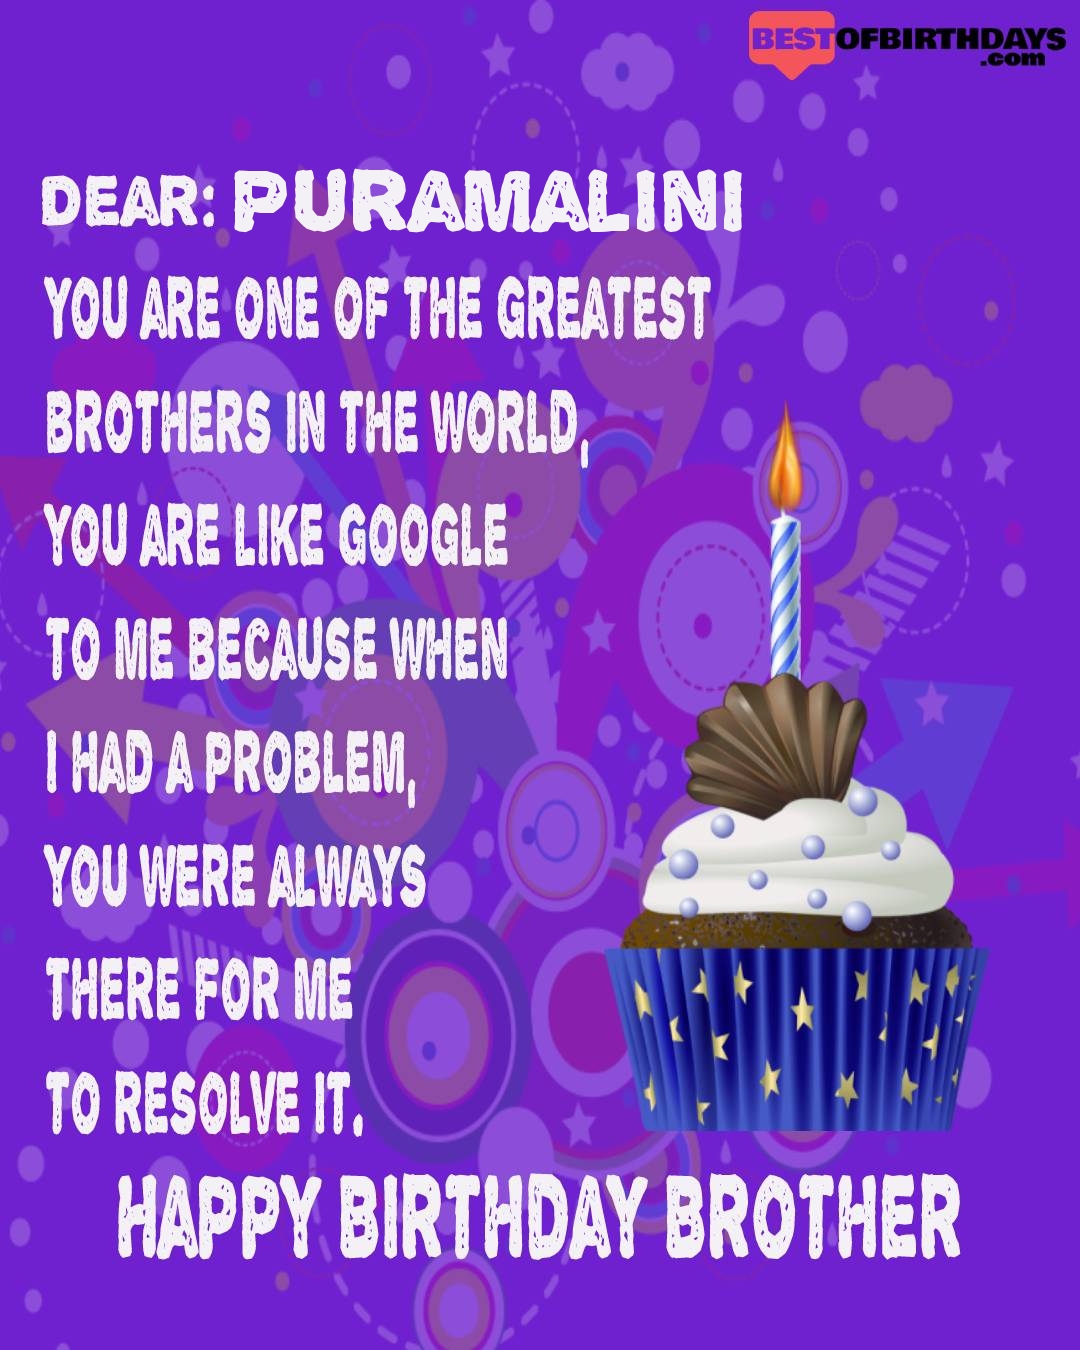 Happy birthday puramalini bhai brother bro